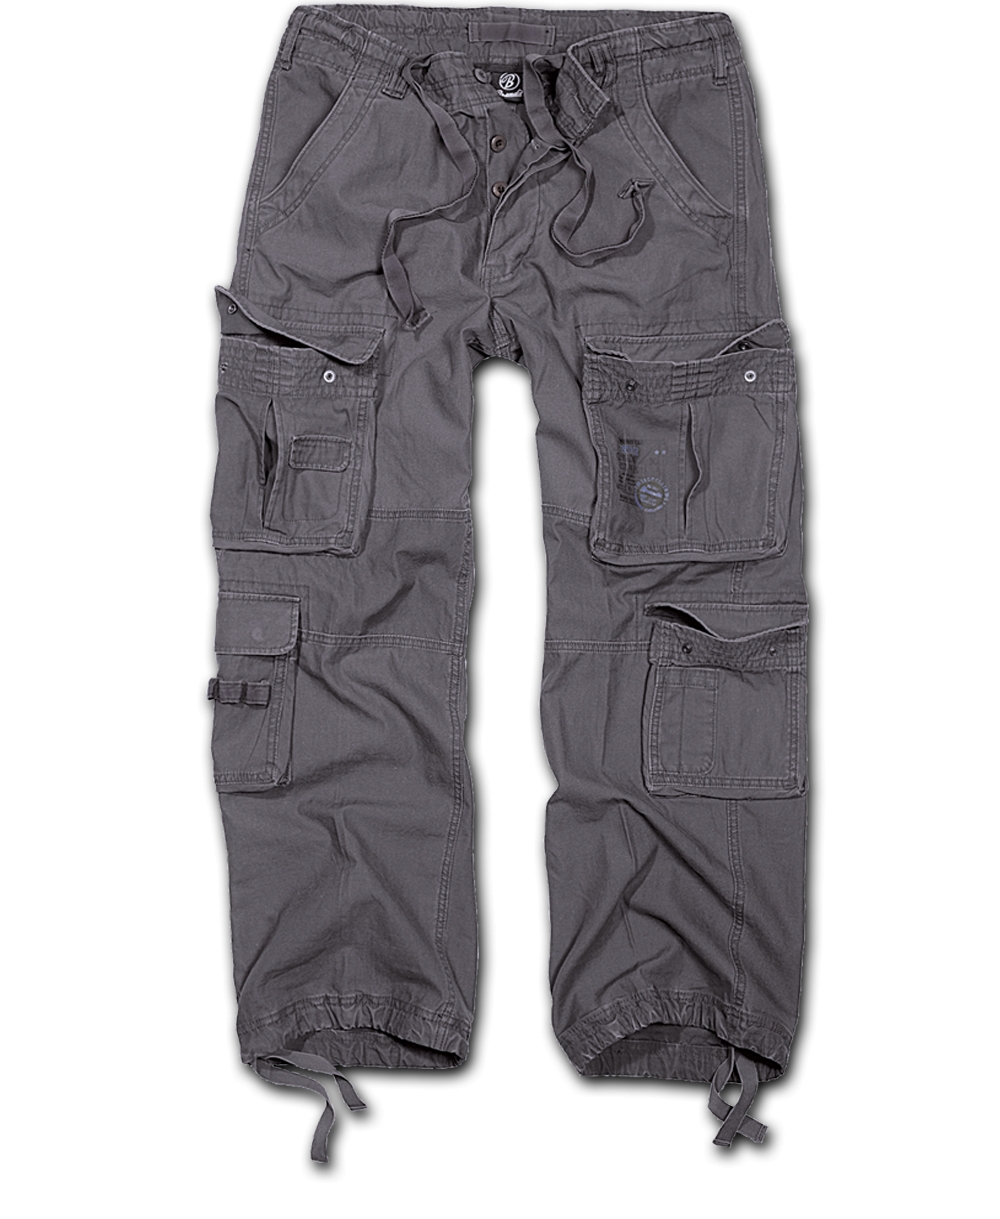 Kalhoty Brandit Pure Vintage - antracitové, 4XL